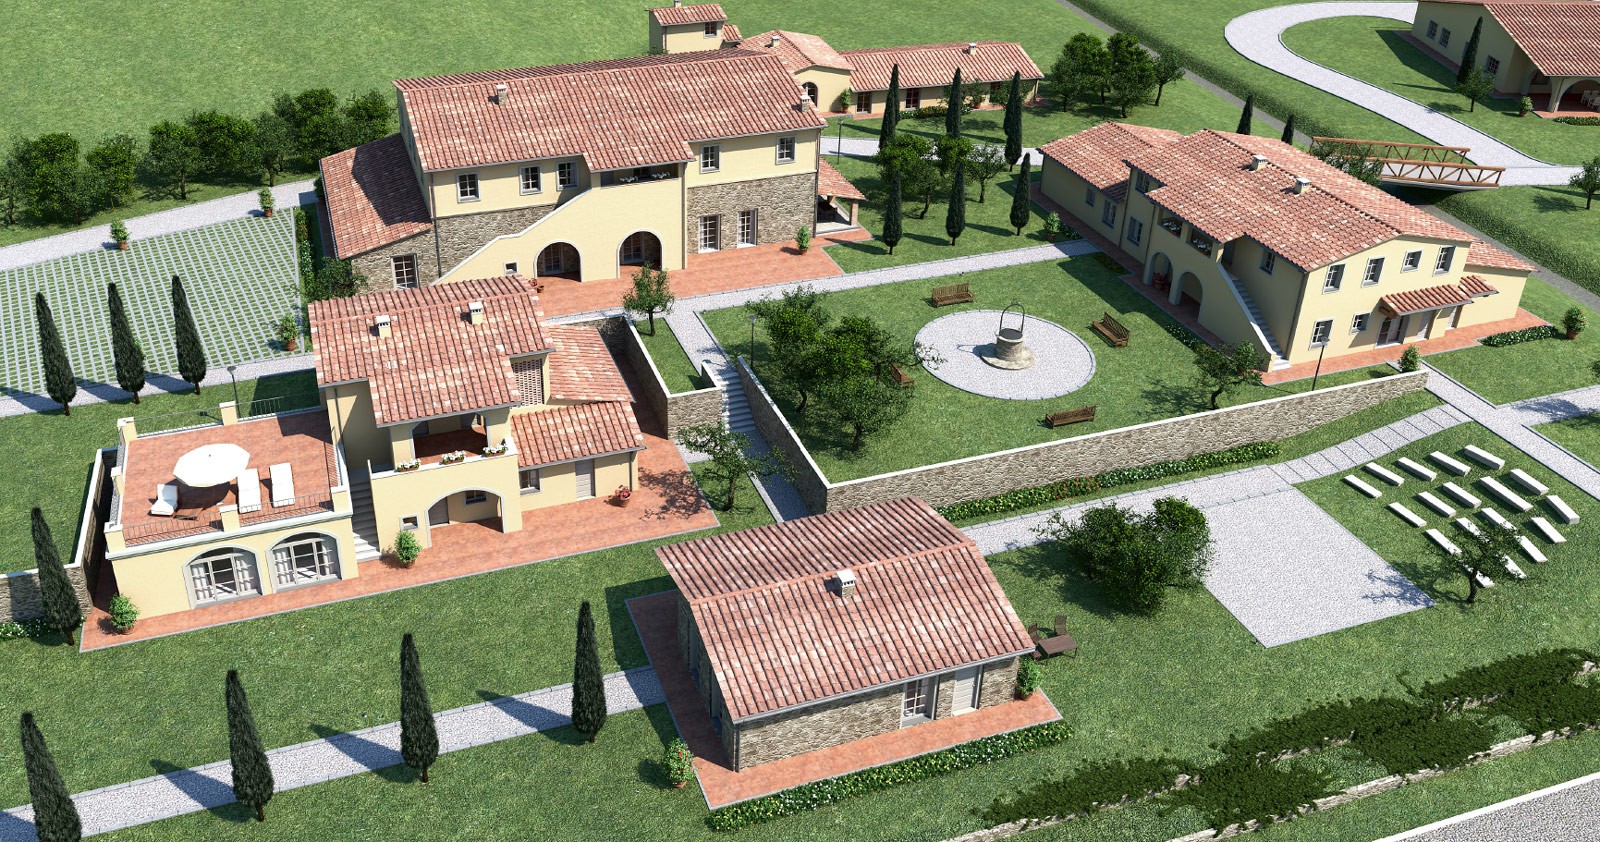 A vendre transaction immobilière in zone tranquille Volterra Toscana